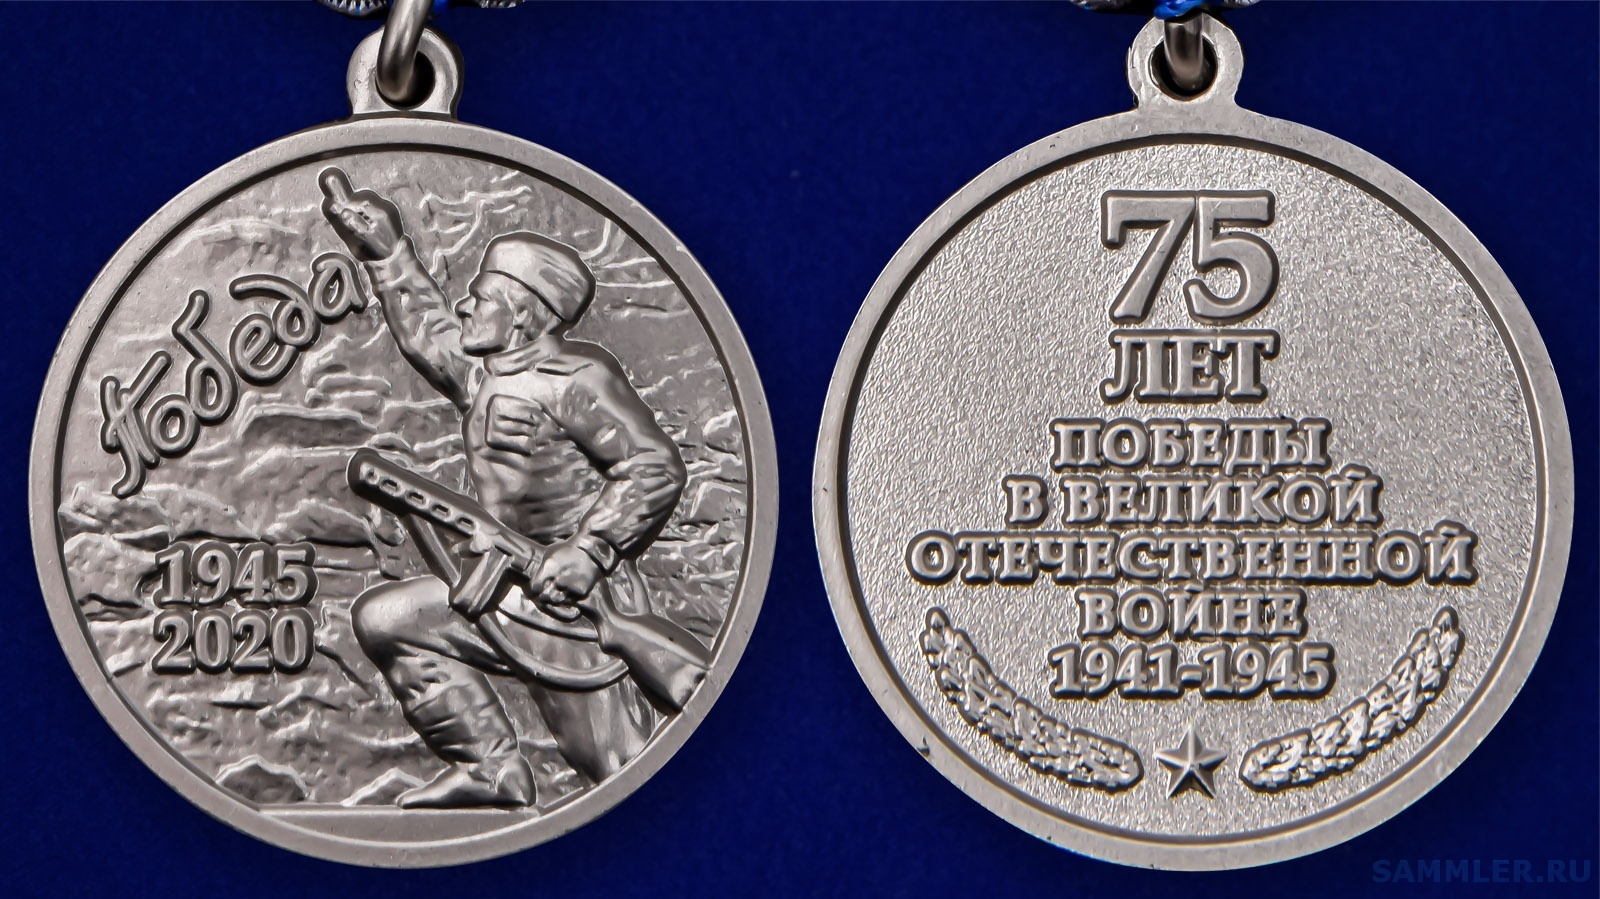 yubilejnaya-medal-75-let-pobe.jpg